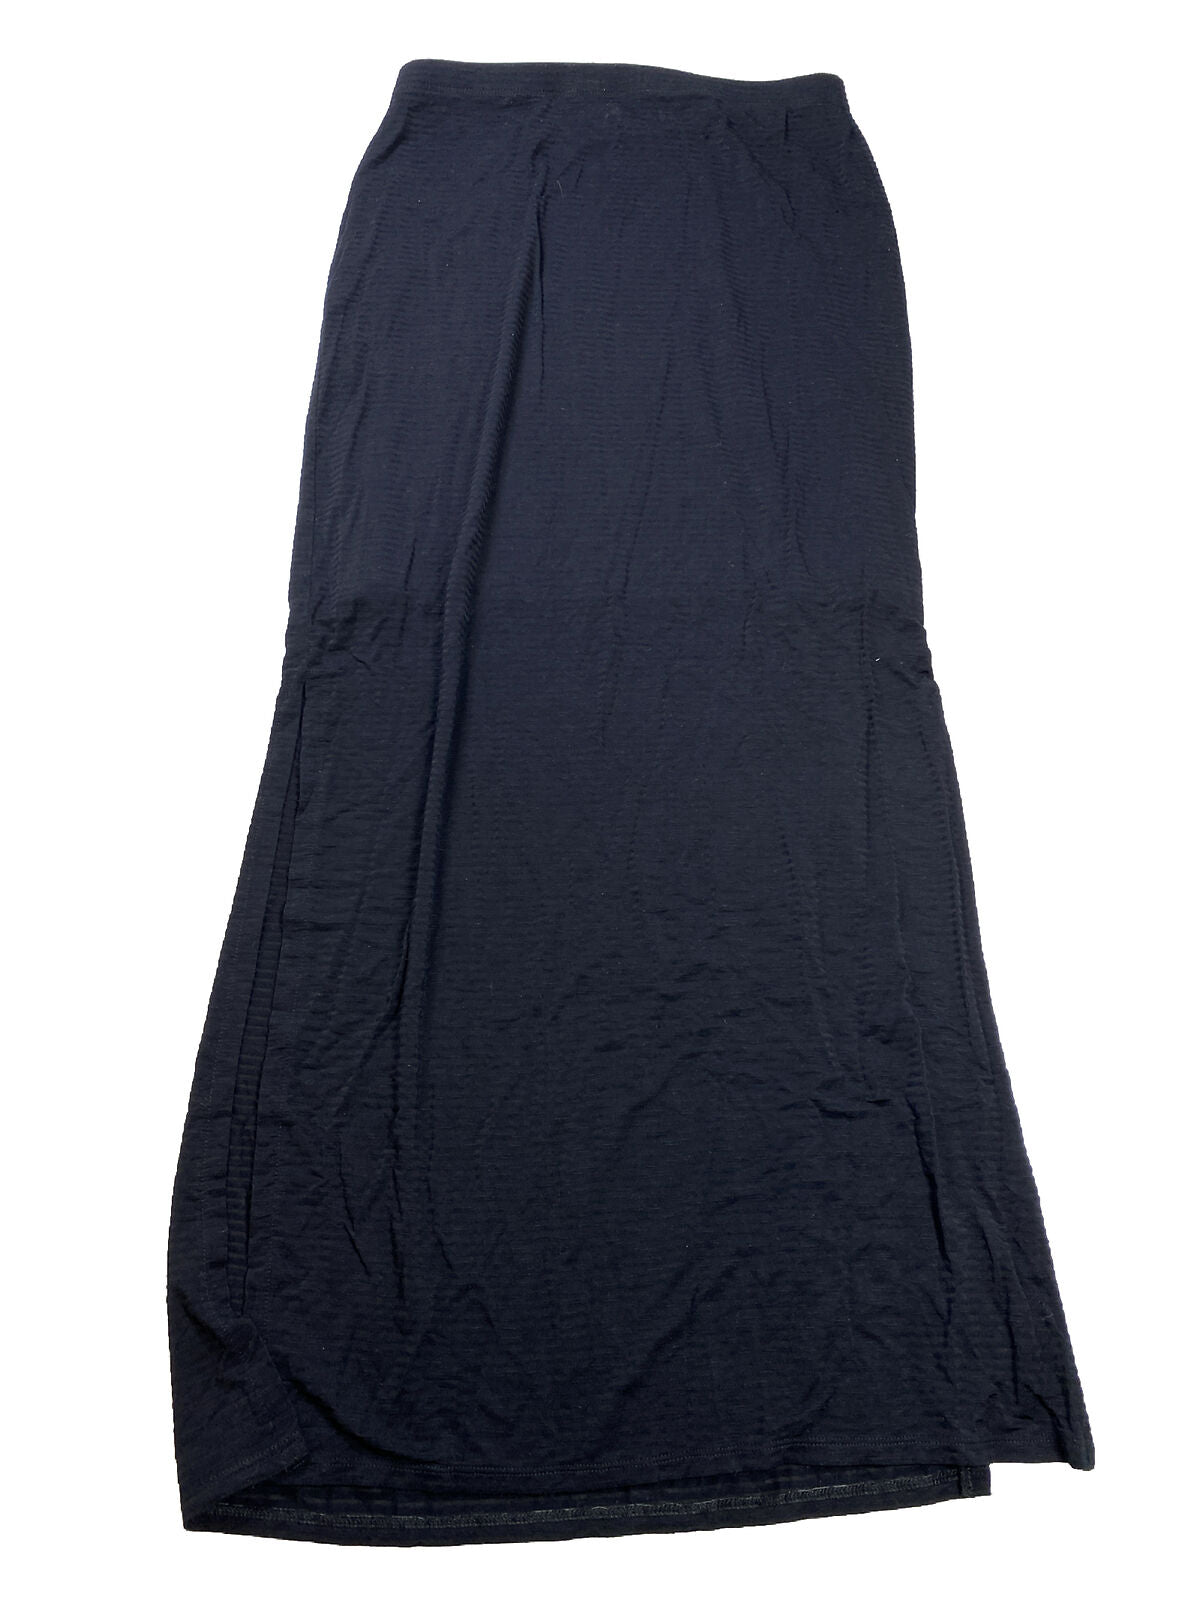 White House Black Market Women's Black Shadow Maxi Skirt - XS